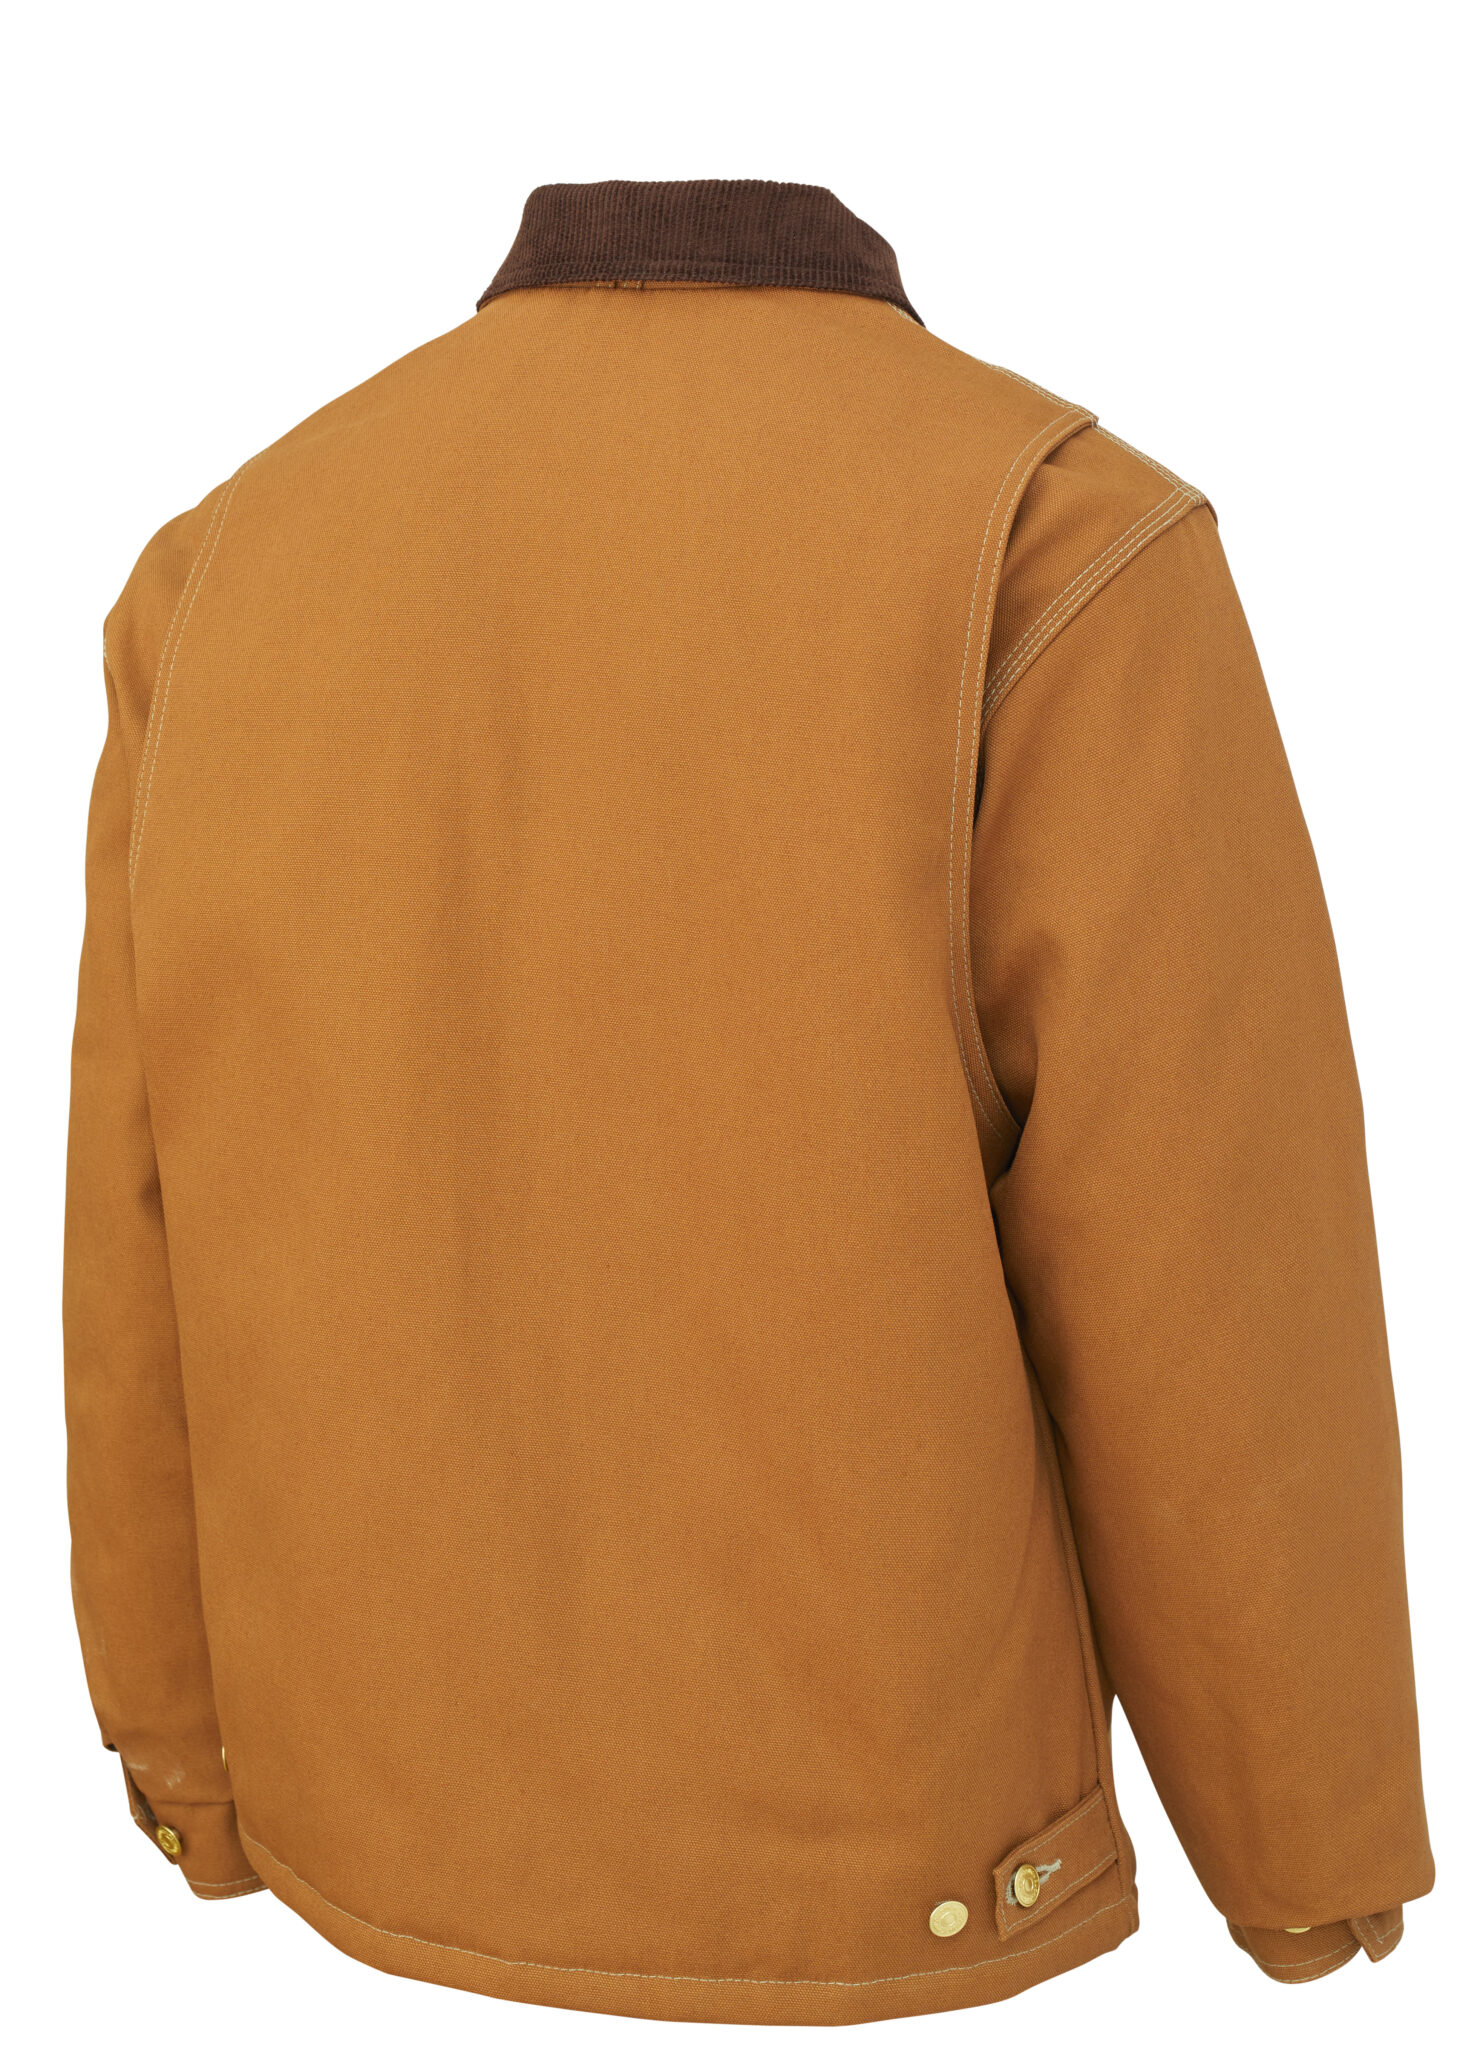 Tough Duck 213716-BLK-Medium Men's Quilt Lined Work Jacket, Black